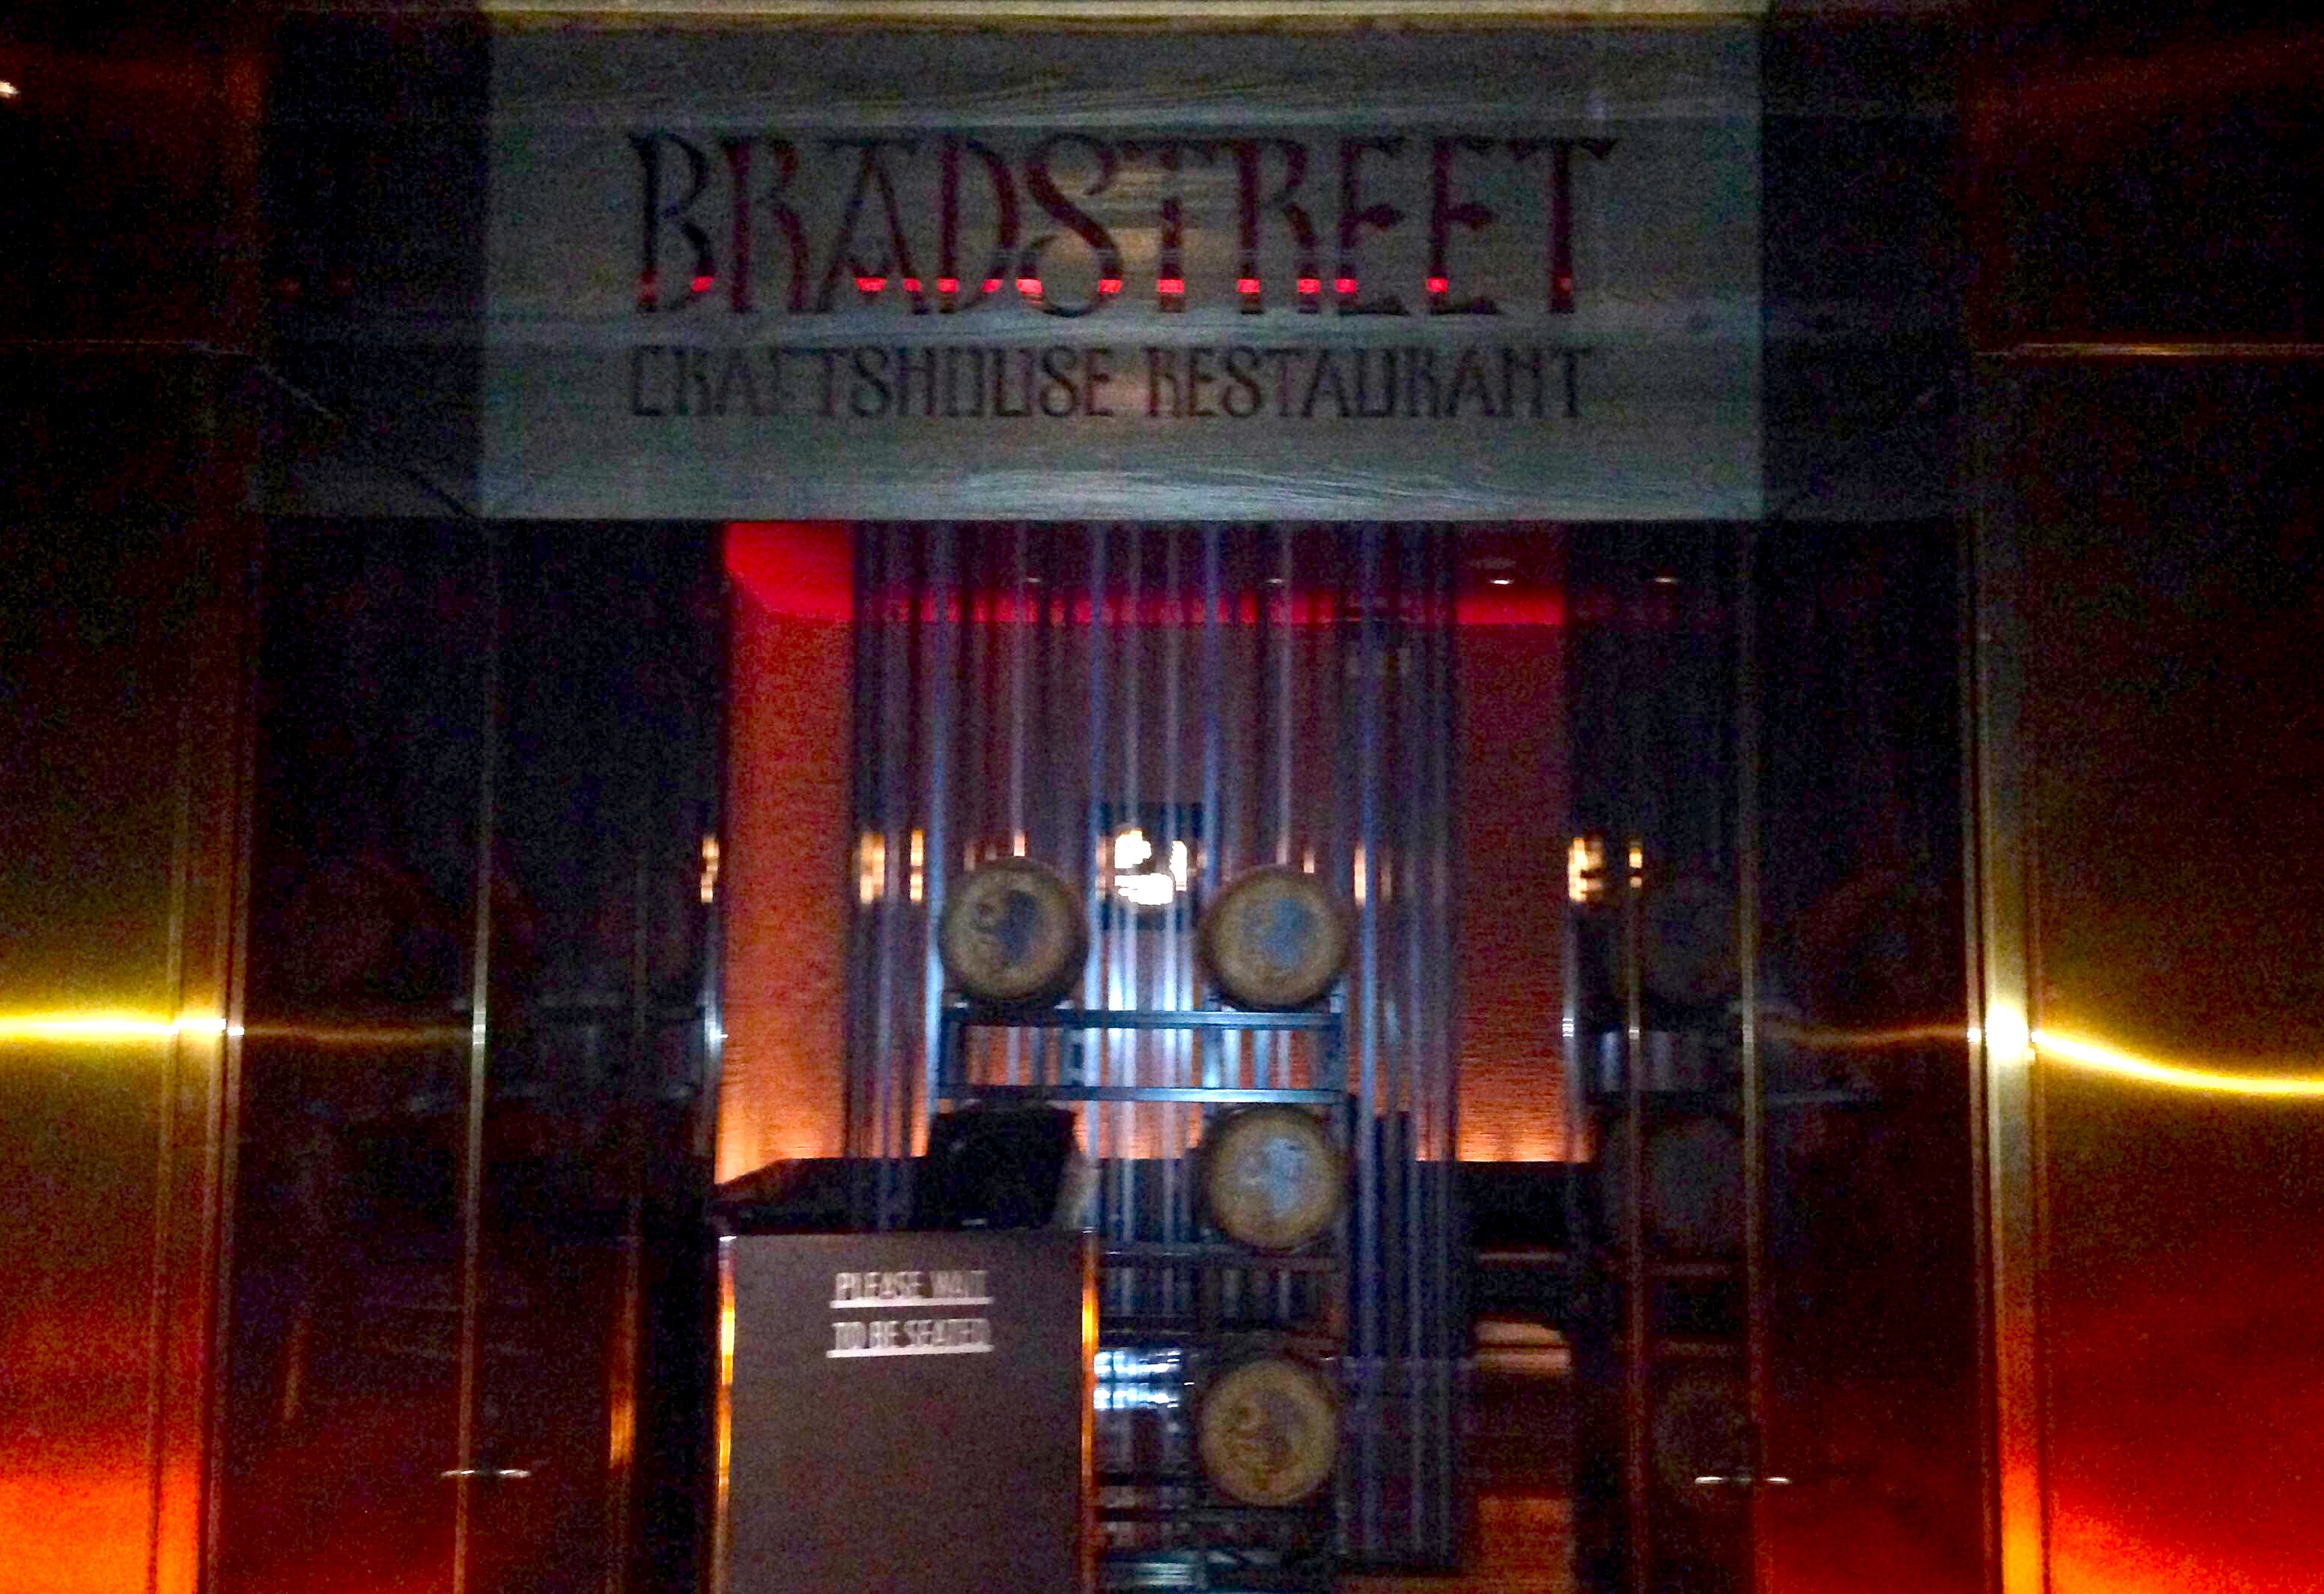 bradstreet crafthouse - restaurant review